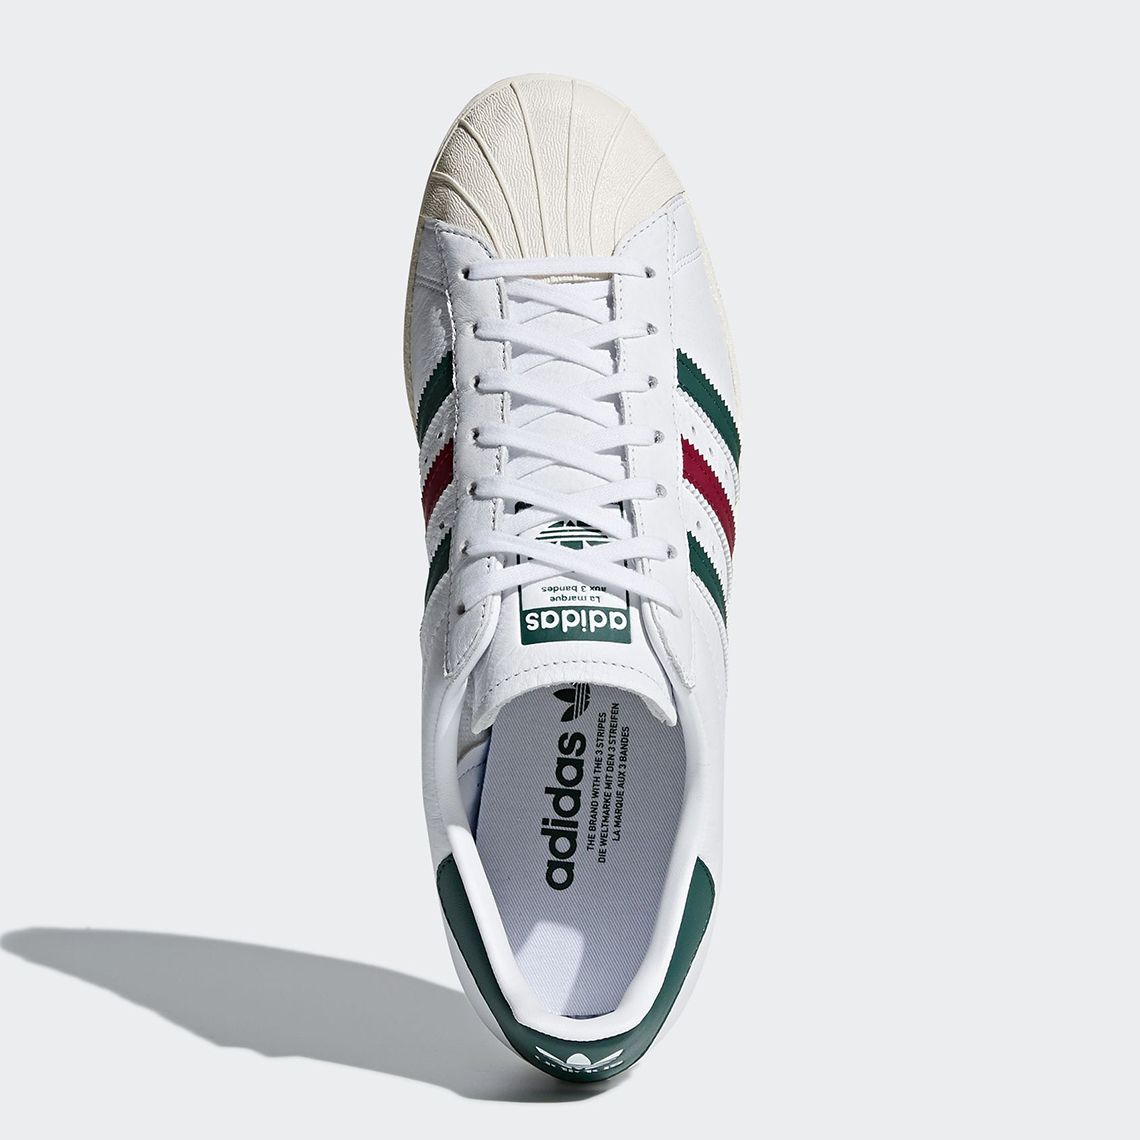 Adidas Superstar Italian Stripes Cq2654 3